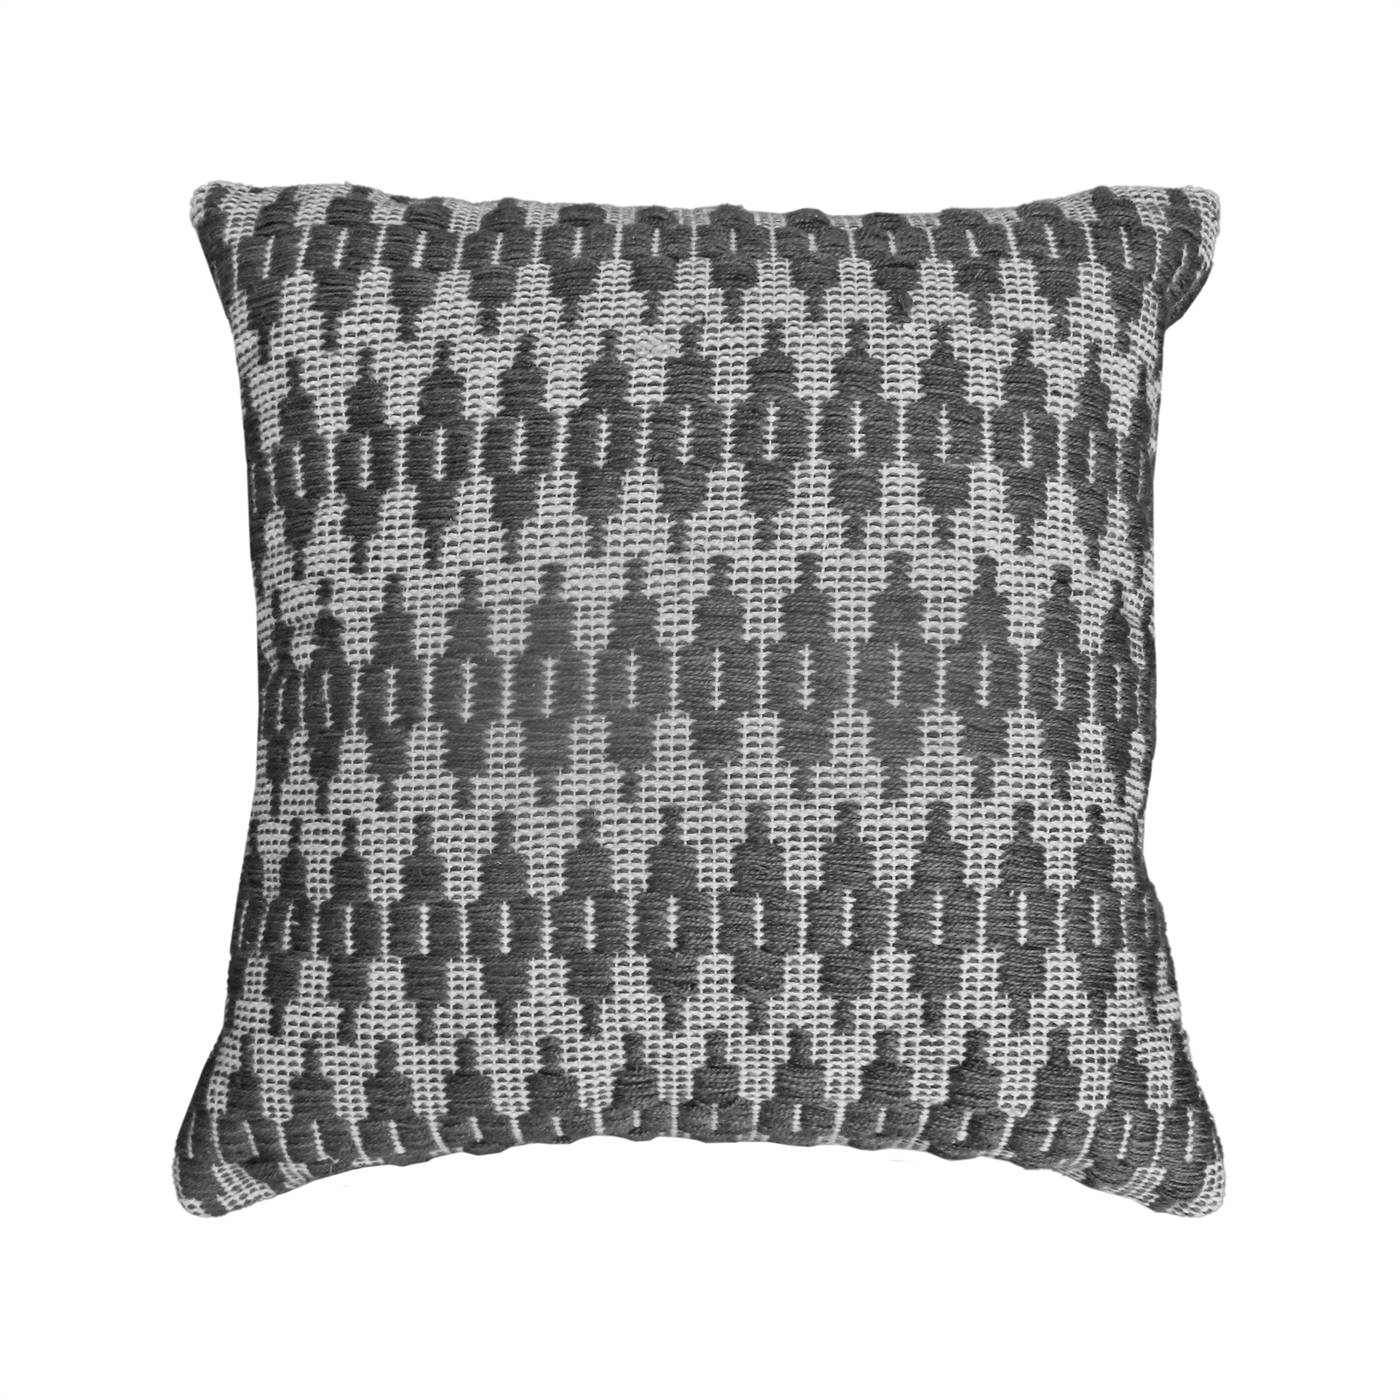 Osbert Cushion, 45x45 cm, Grey, Natural White, PET, Hand Woven, Pitloom, Flat Weave